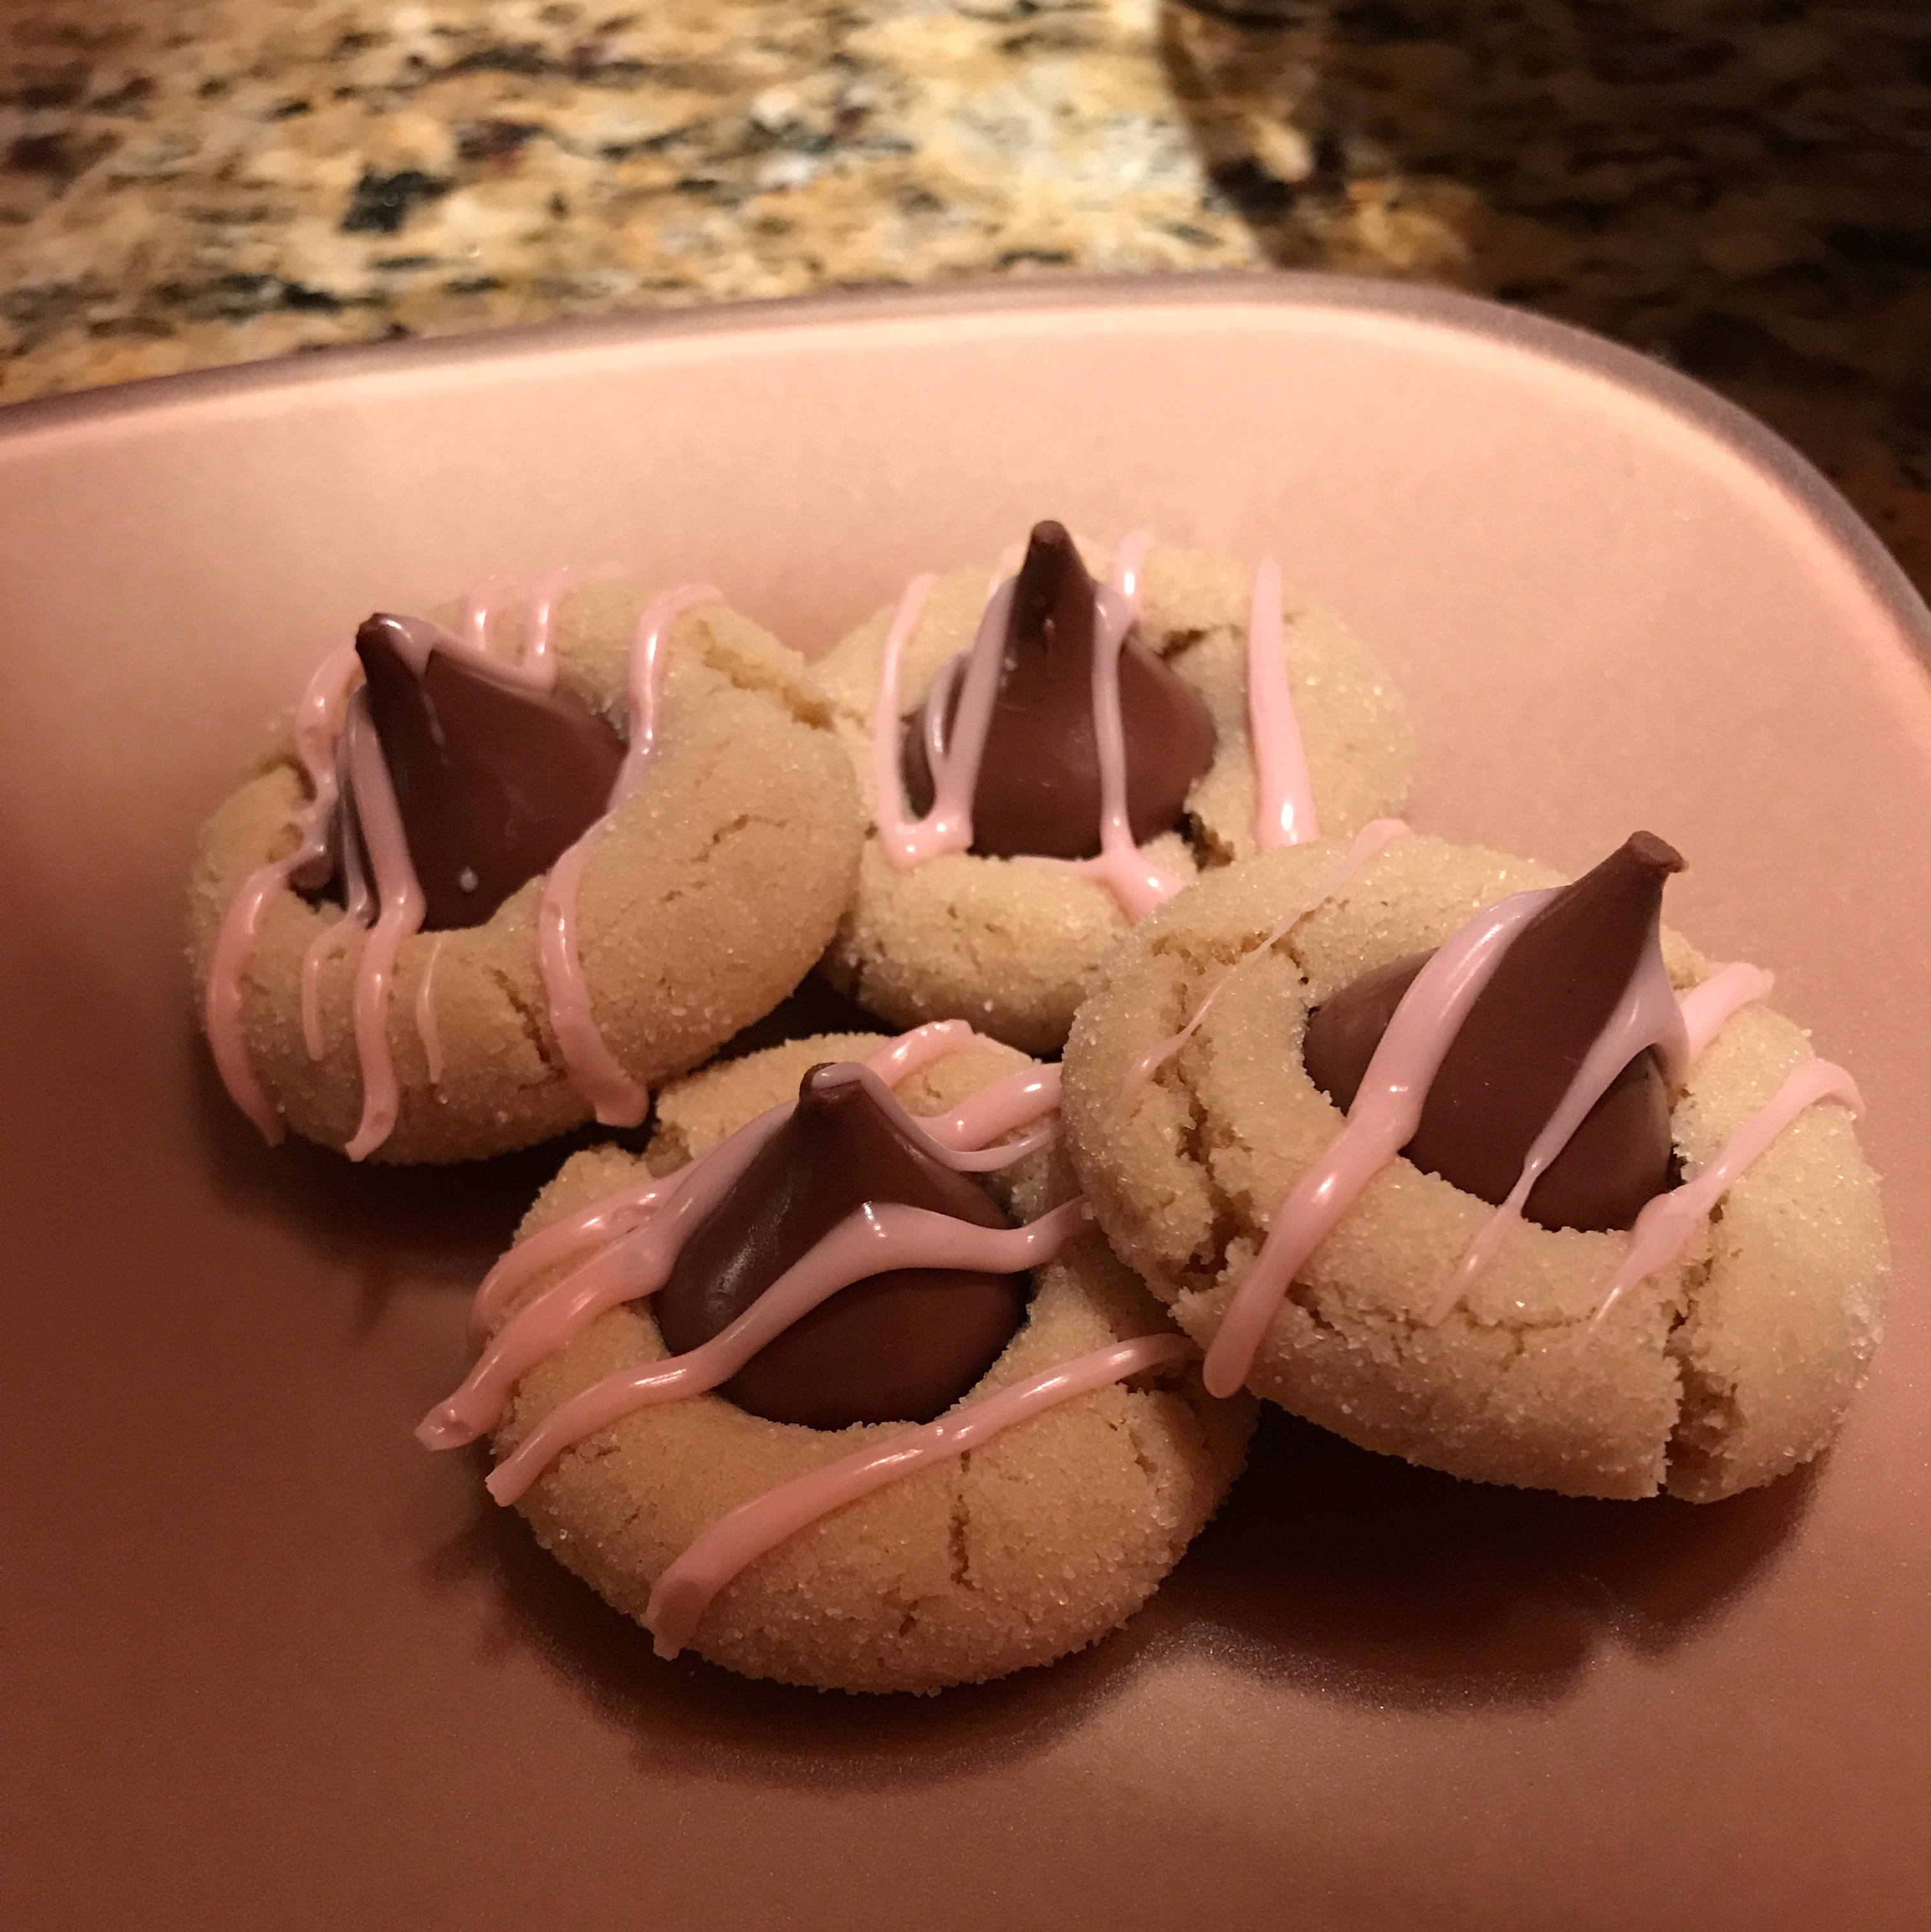 Raspberry Almond Kiss Cookies 